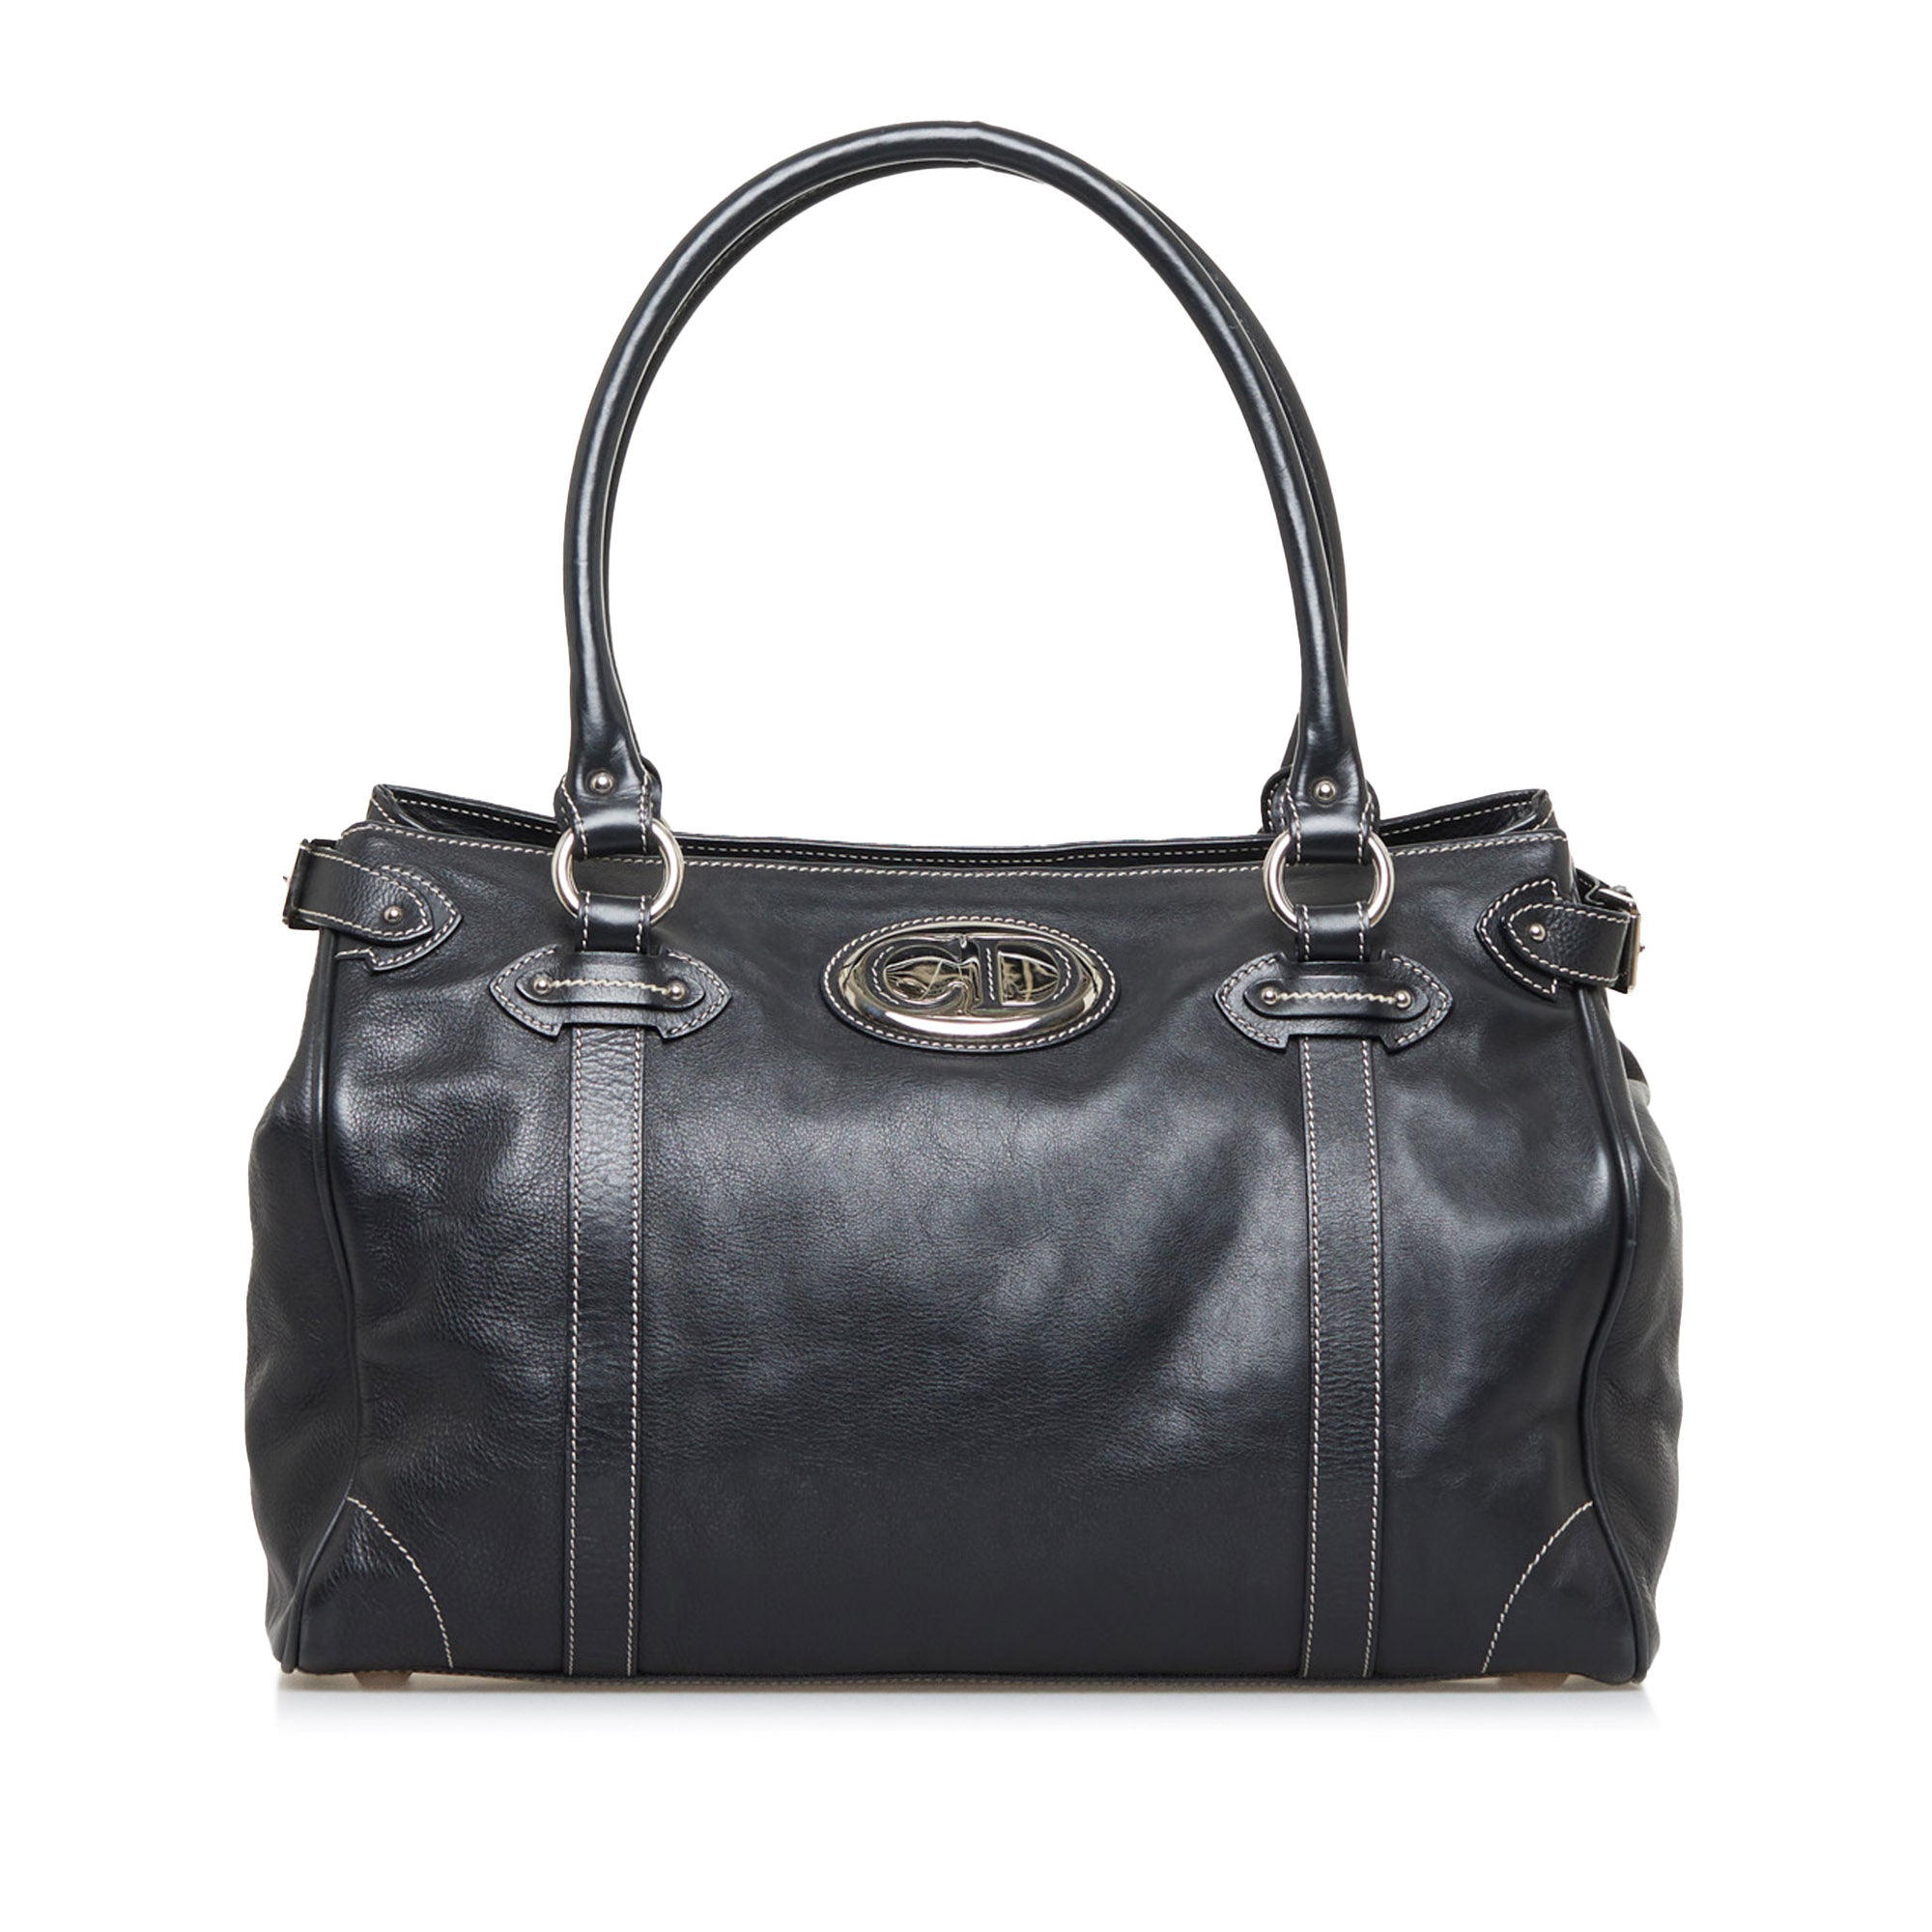 Louis Vuitton - Authenticated Saint-Germain Handbag - Leather Brown for Women, Good Condition